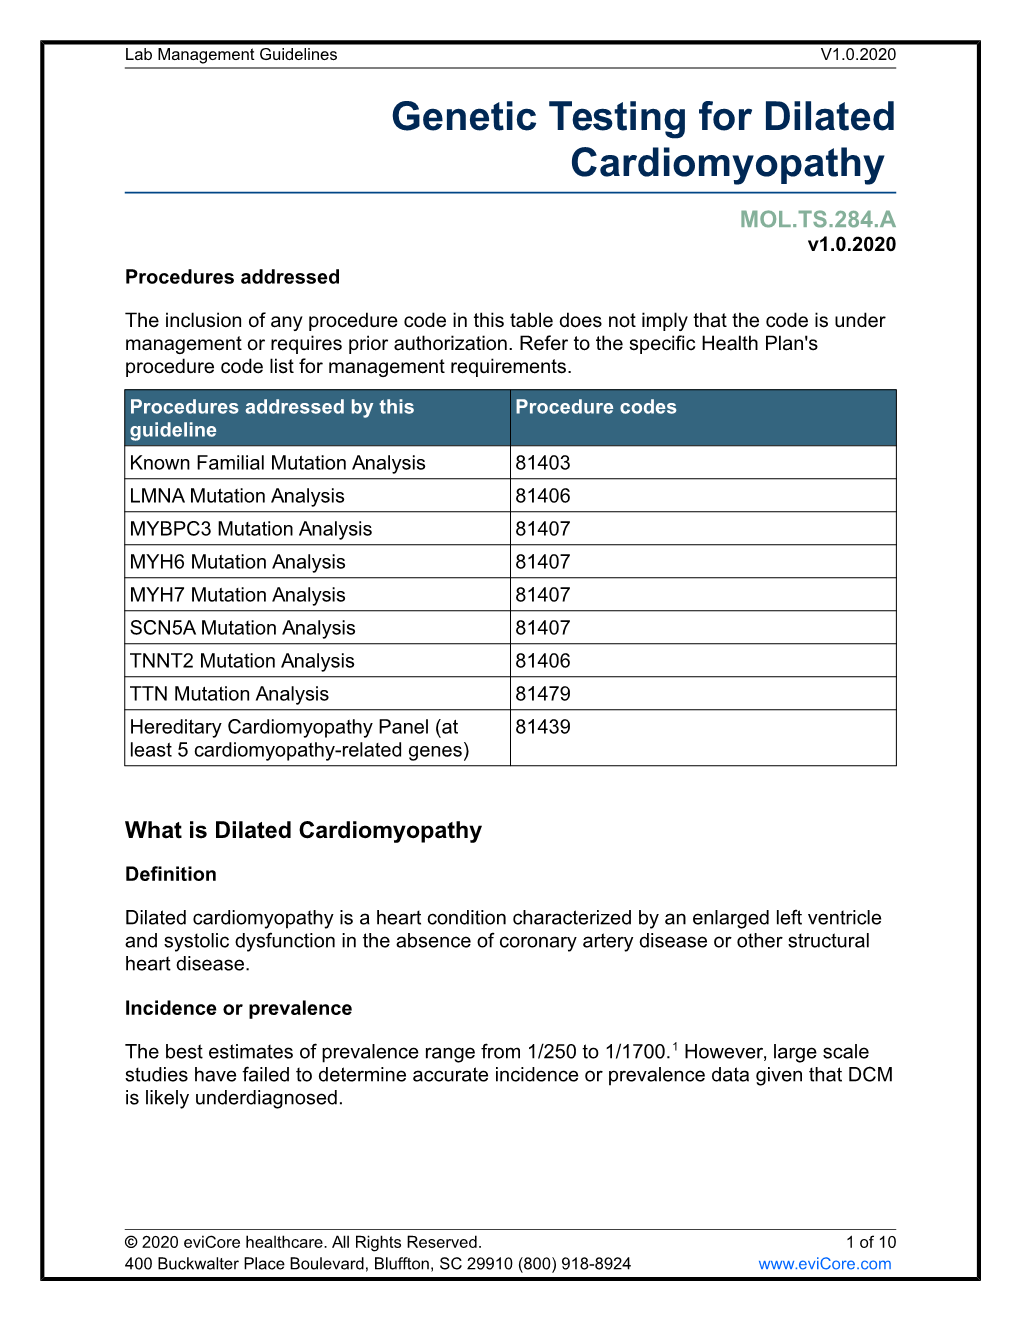 Genetic Testing for Dilated Cardiomyopathy